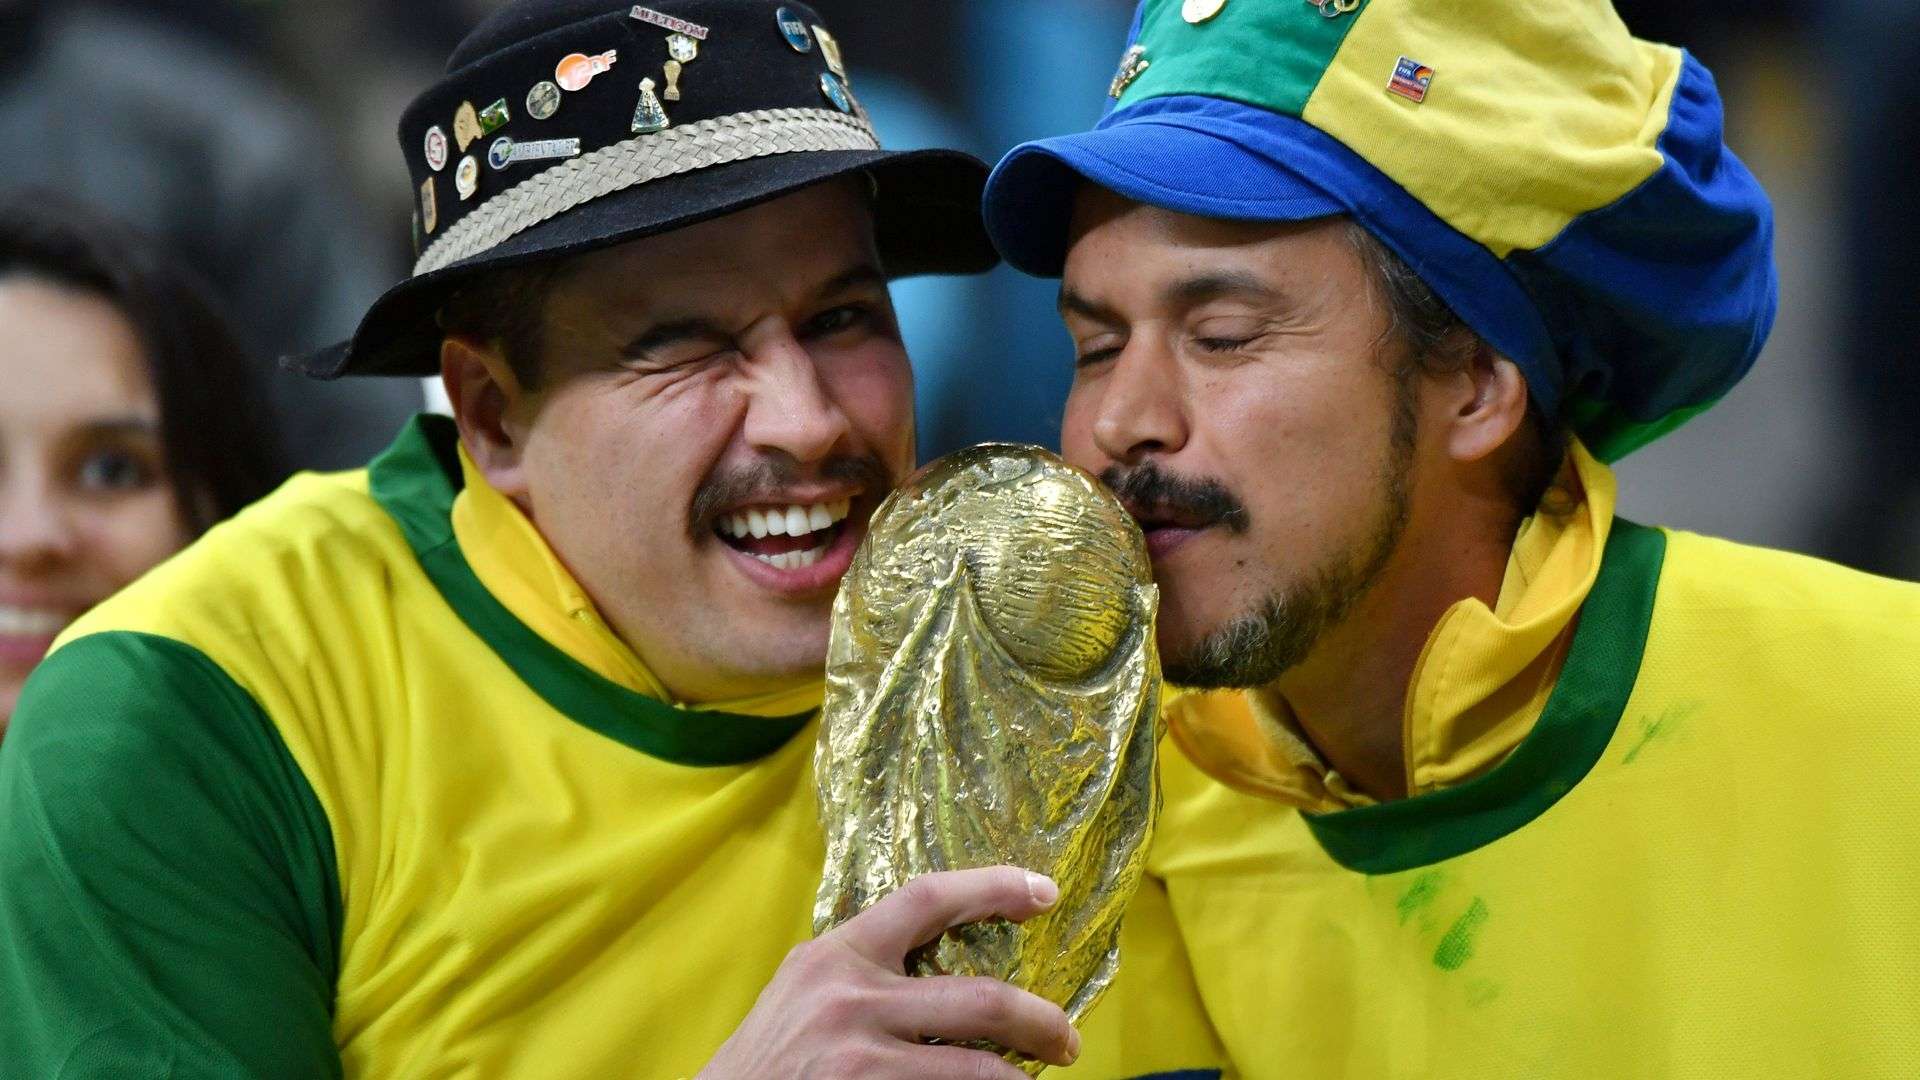 Torcida Brazil Ecuador Eliminatorias 2018 31082017